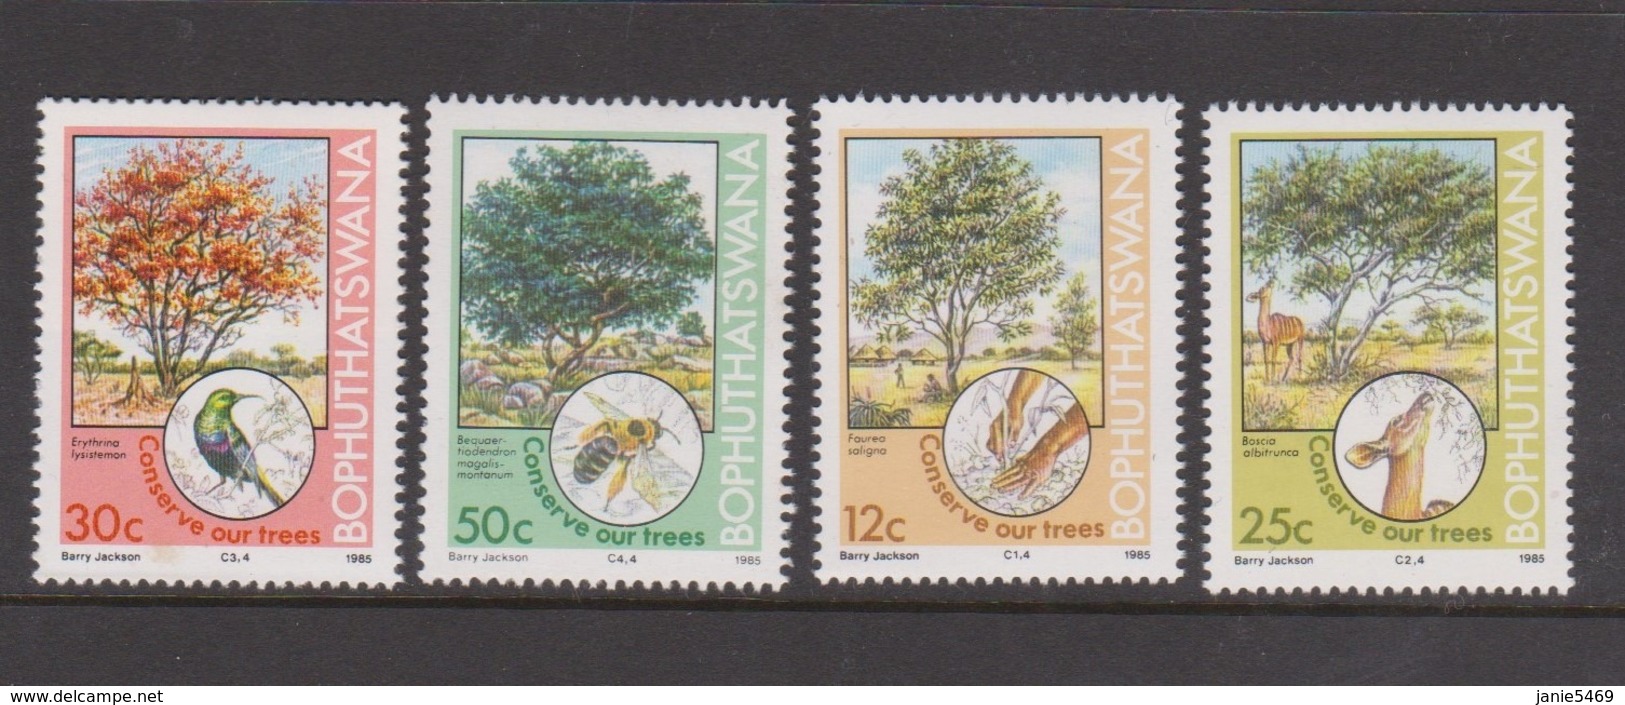 South Africa-Bophuthatswana SG 164-167 1985bTree Conservation,Mint Never Hinged - Bophuthatswana